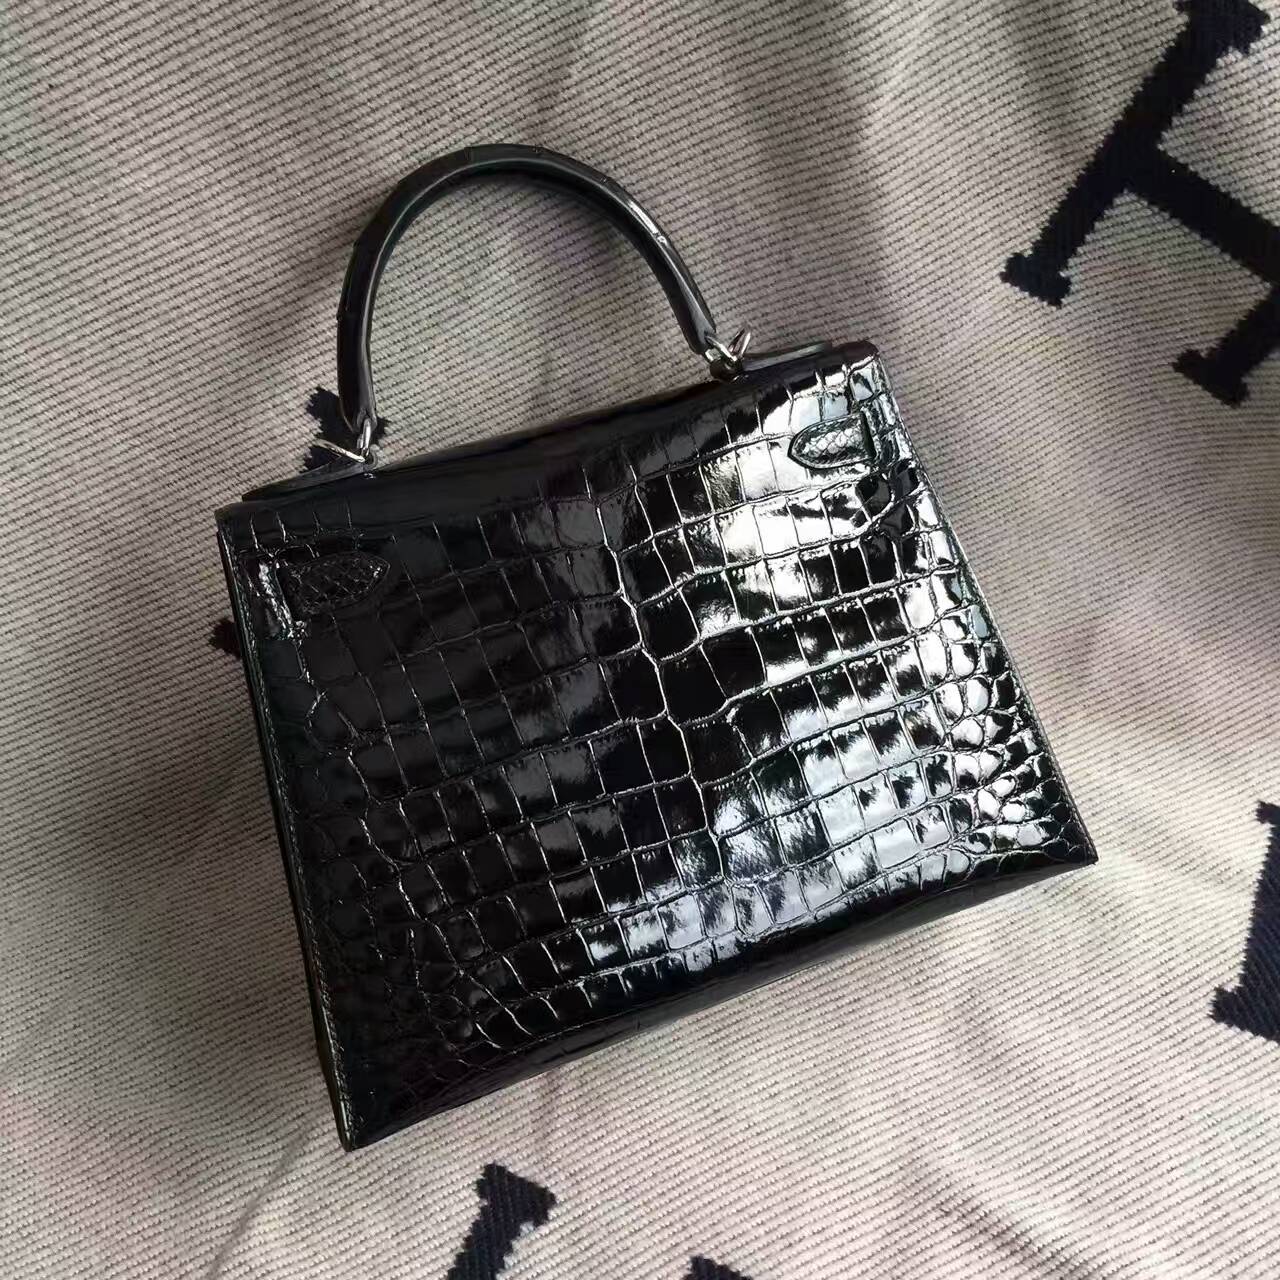 High Quality Hermes CK89 Black Crocodile Shiny Leather Sellier Kelly Bag 28CM